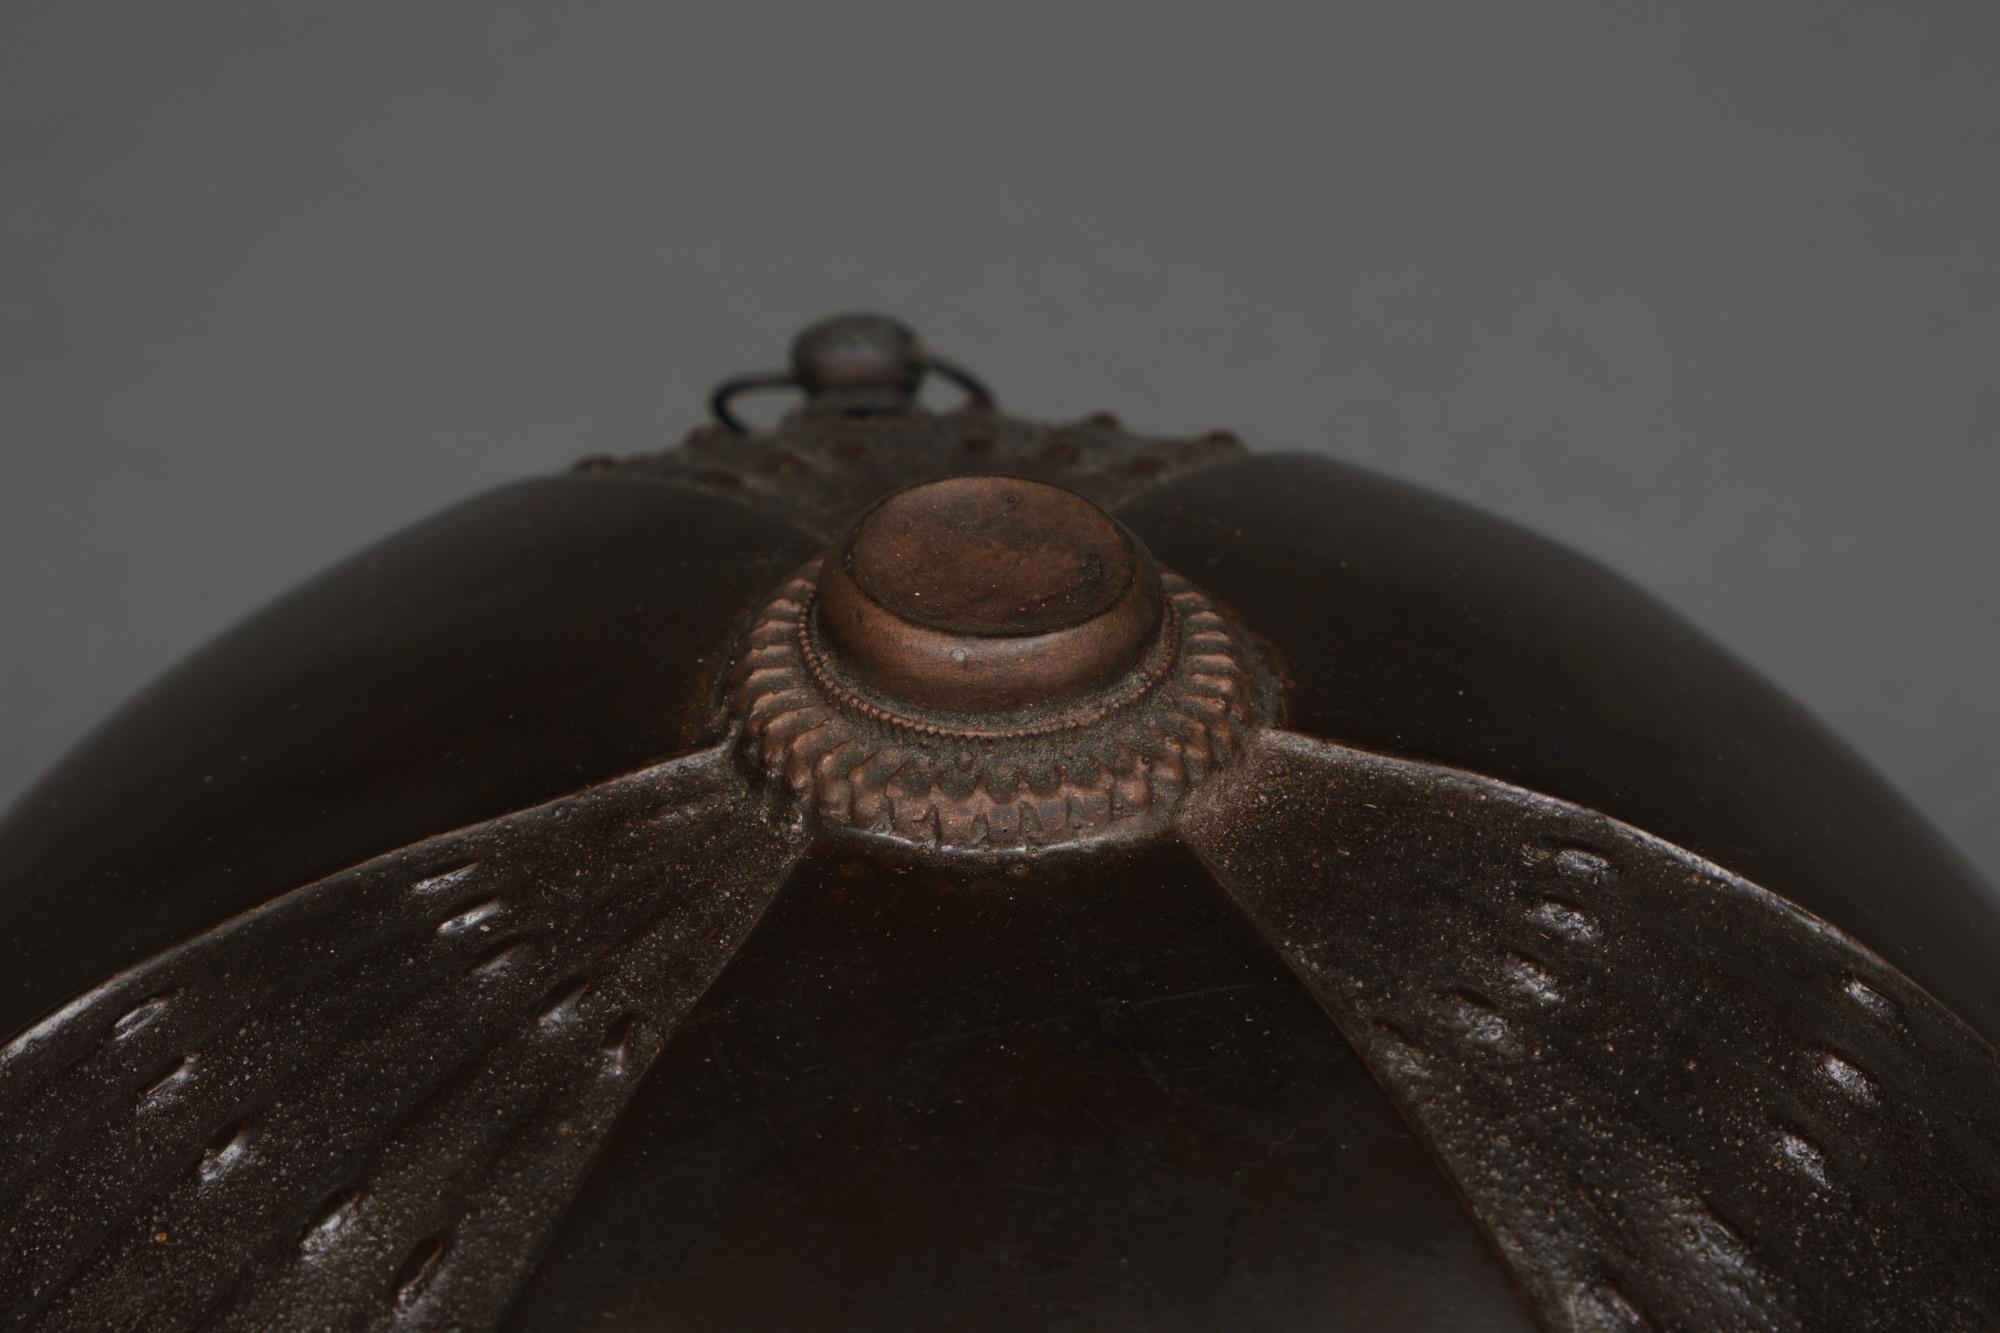 19th Century Japanese black lacquer bajô jingasa 馬上陣笠 (samurai hat) with family crest